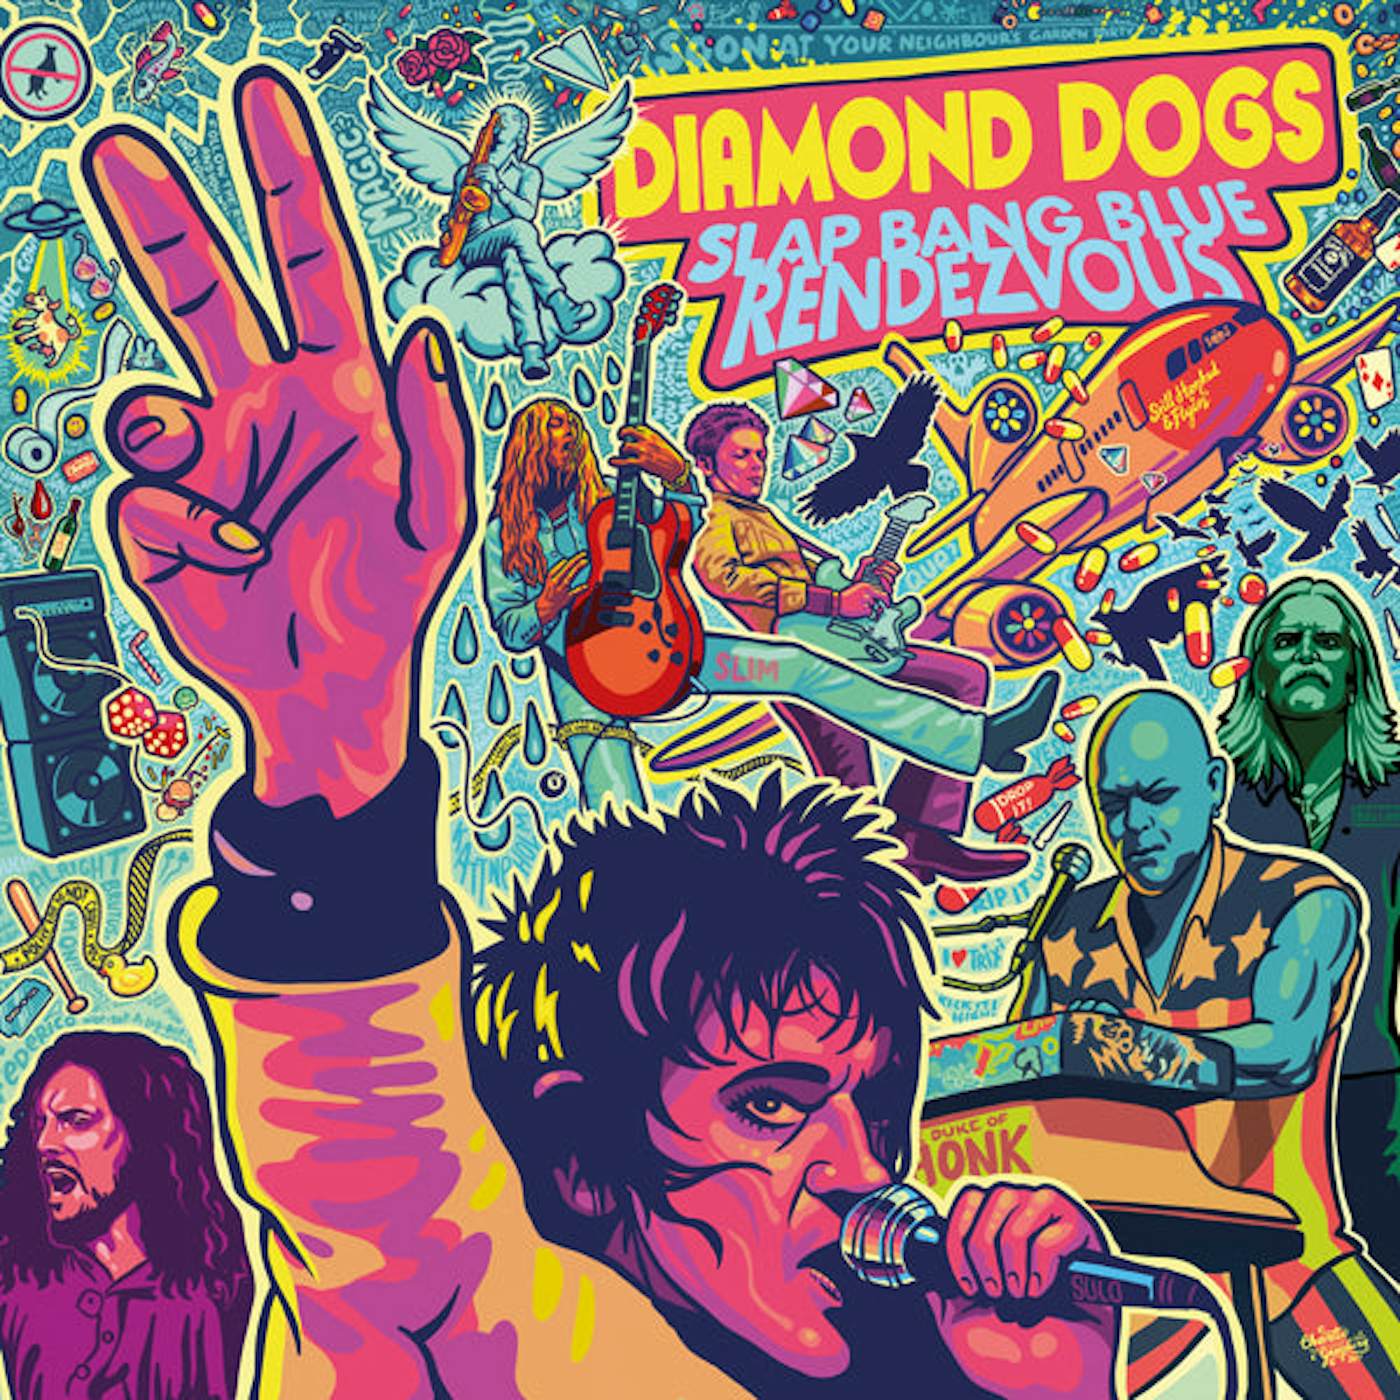 Diamond Dogs LP - Slap Bang Blue Rendezvous (Blue/Yellow Vinyl)